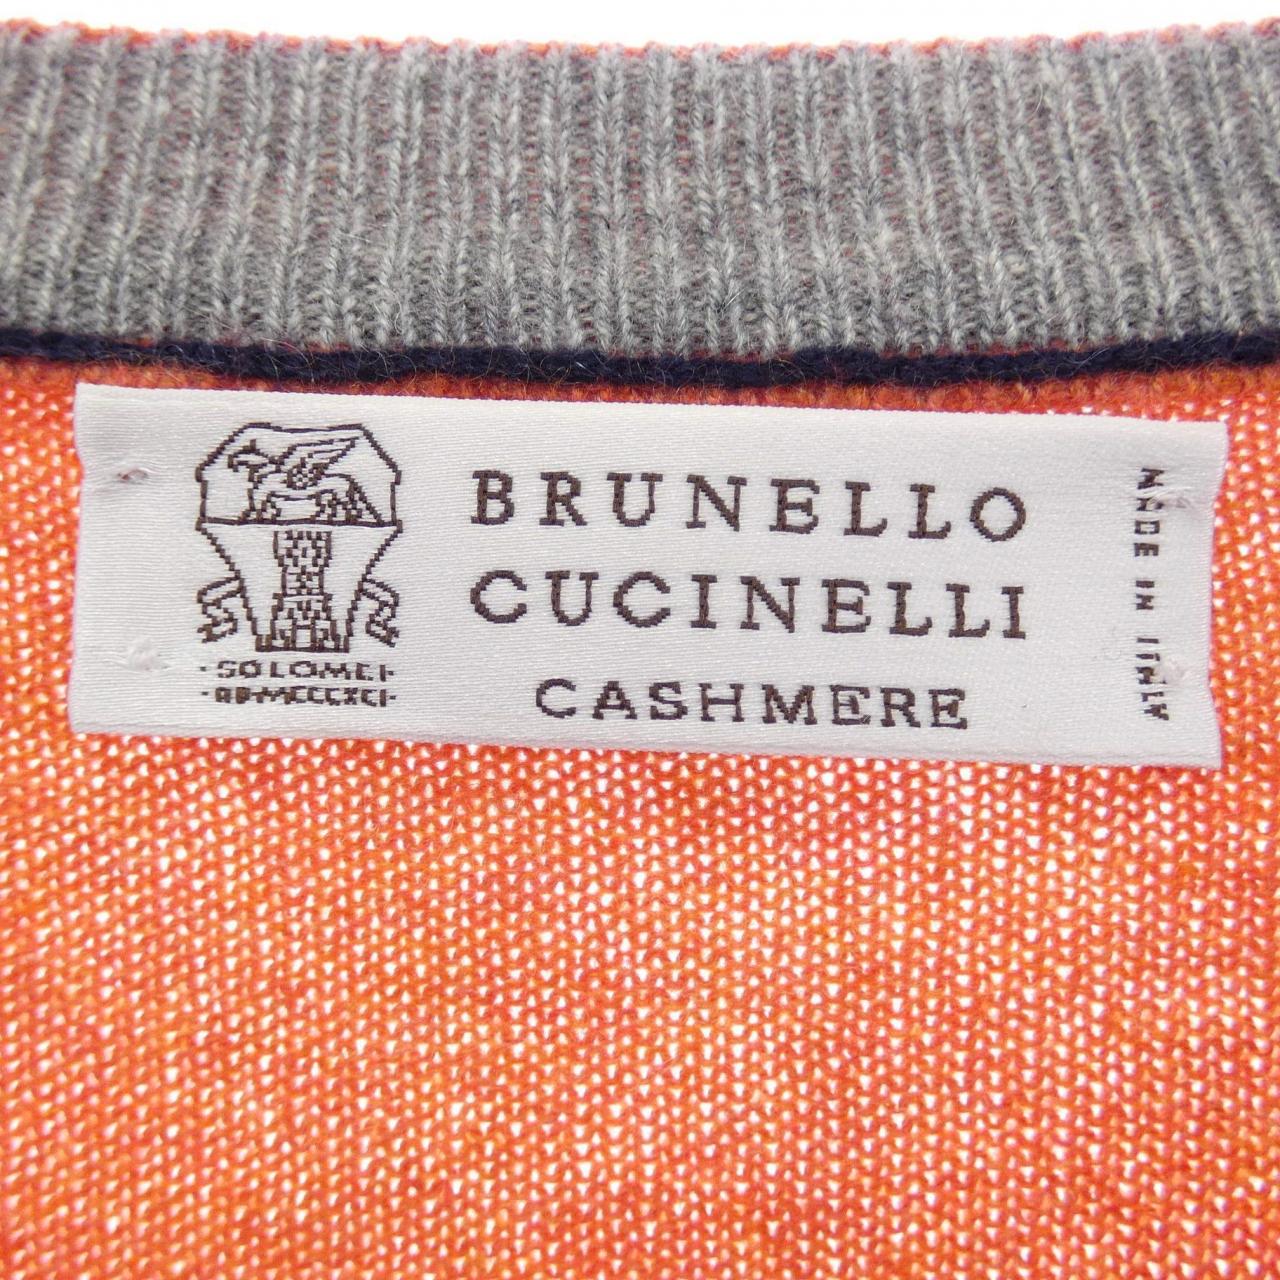 BRUNELLO CUCINELLI CUCINELLI knit